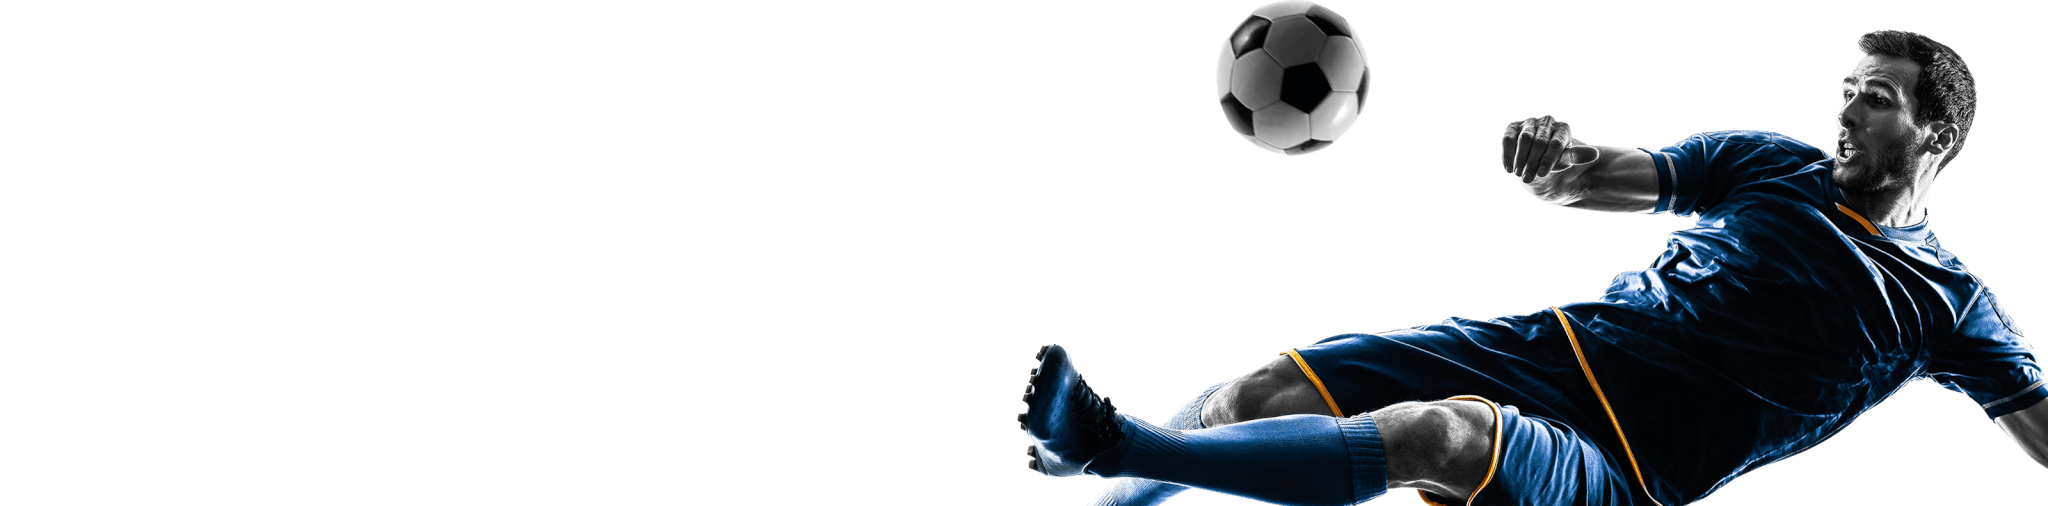 https://kfce.soccer/wp-content/uploads/2017/12/inner_player.png